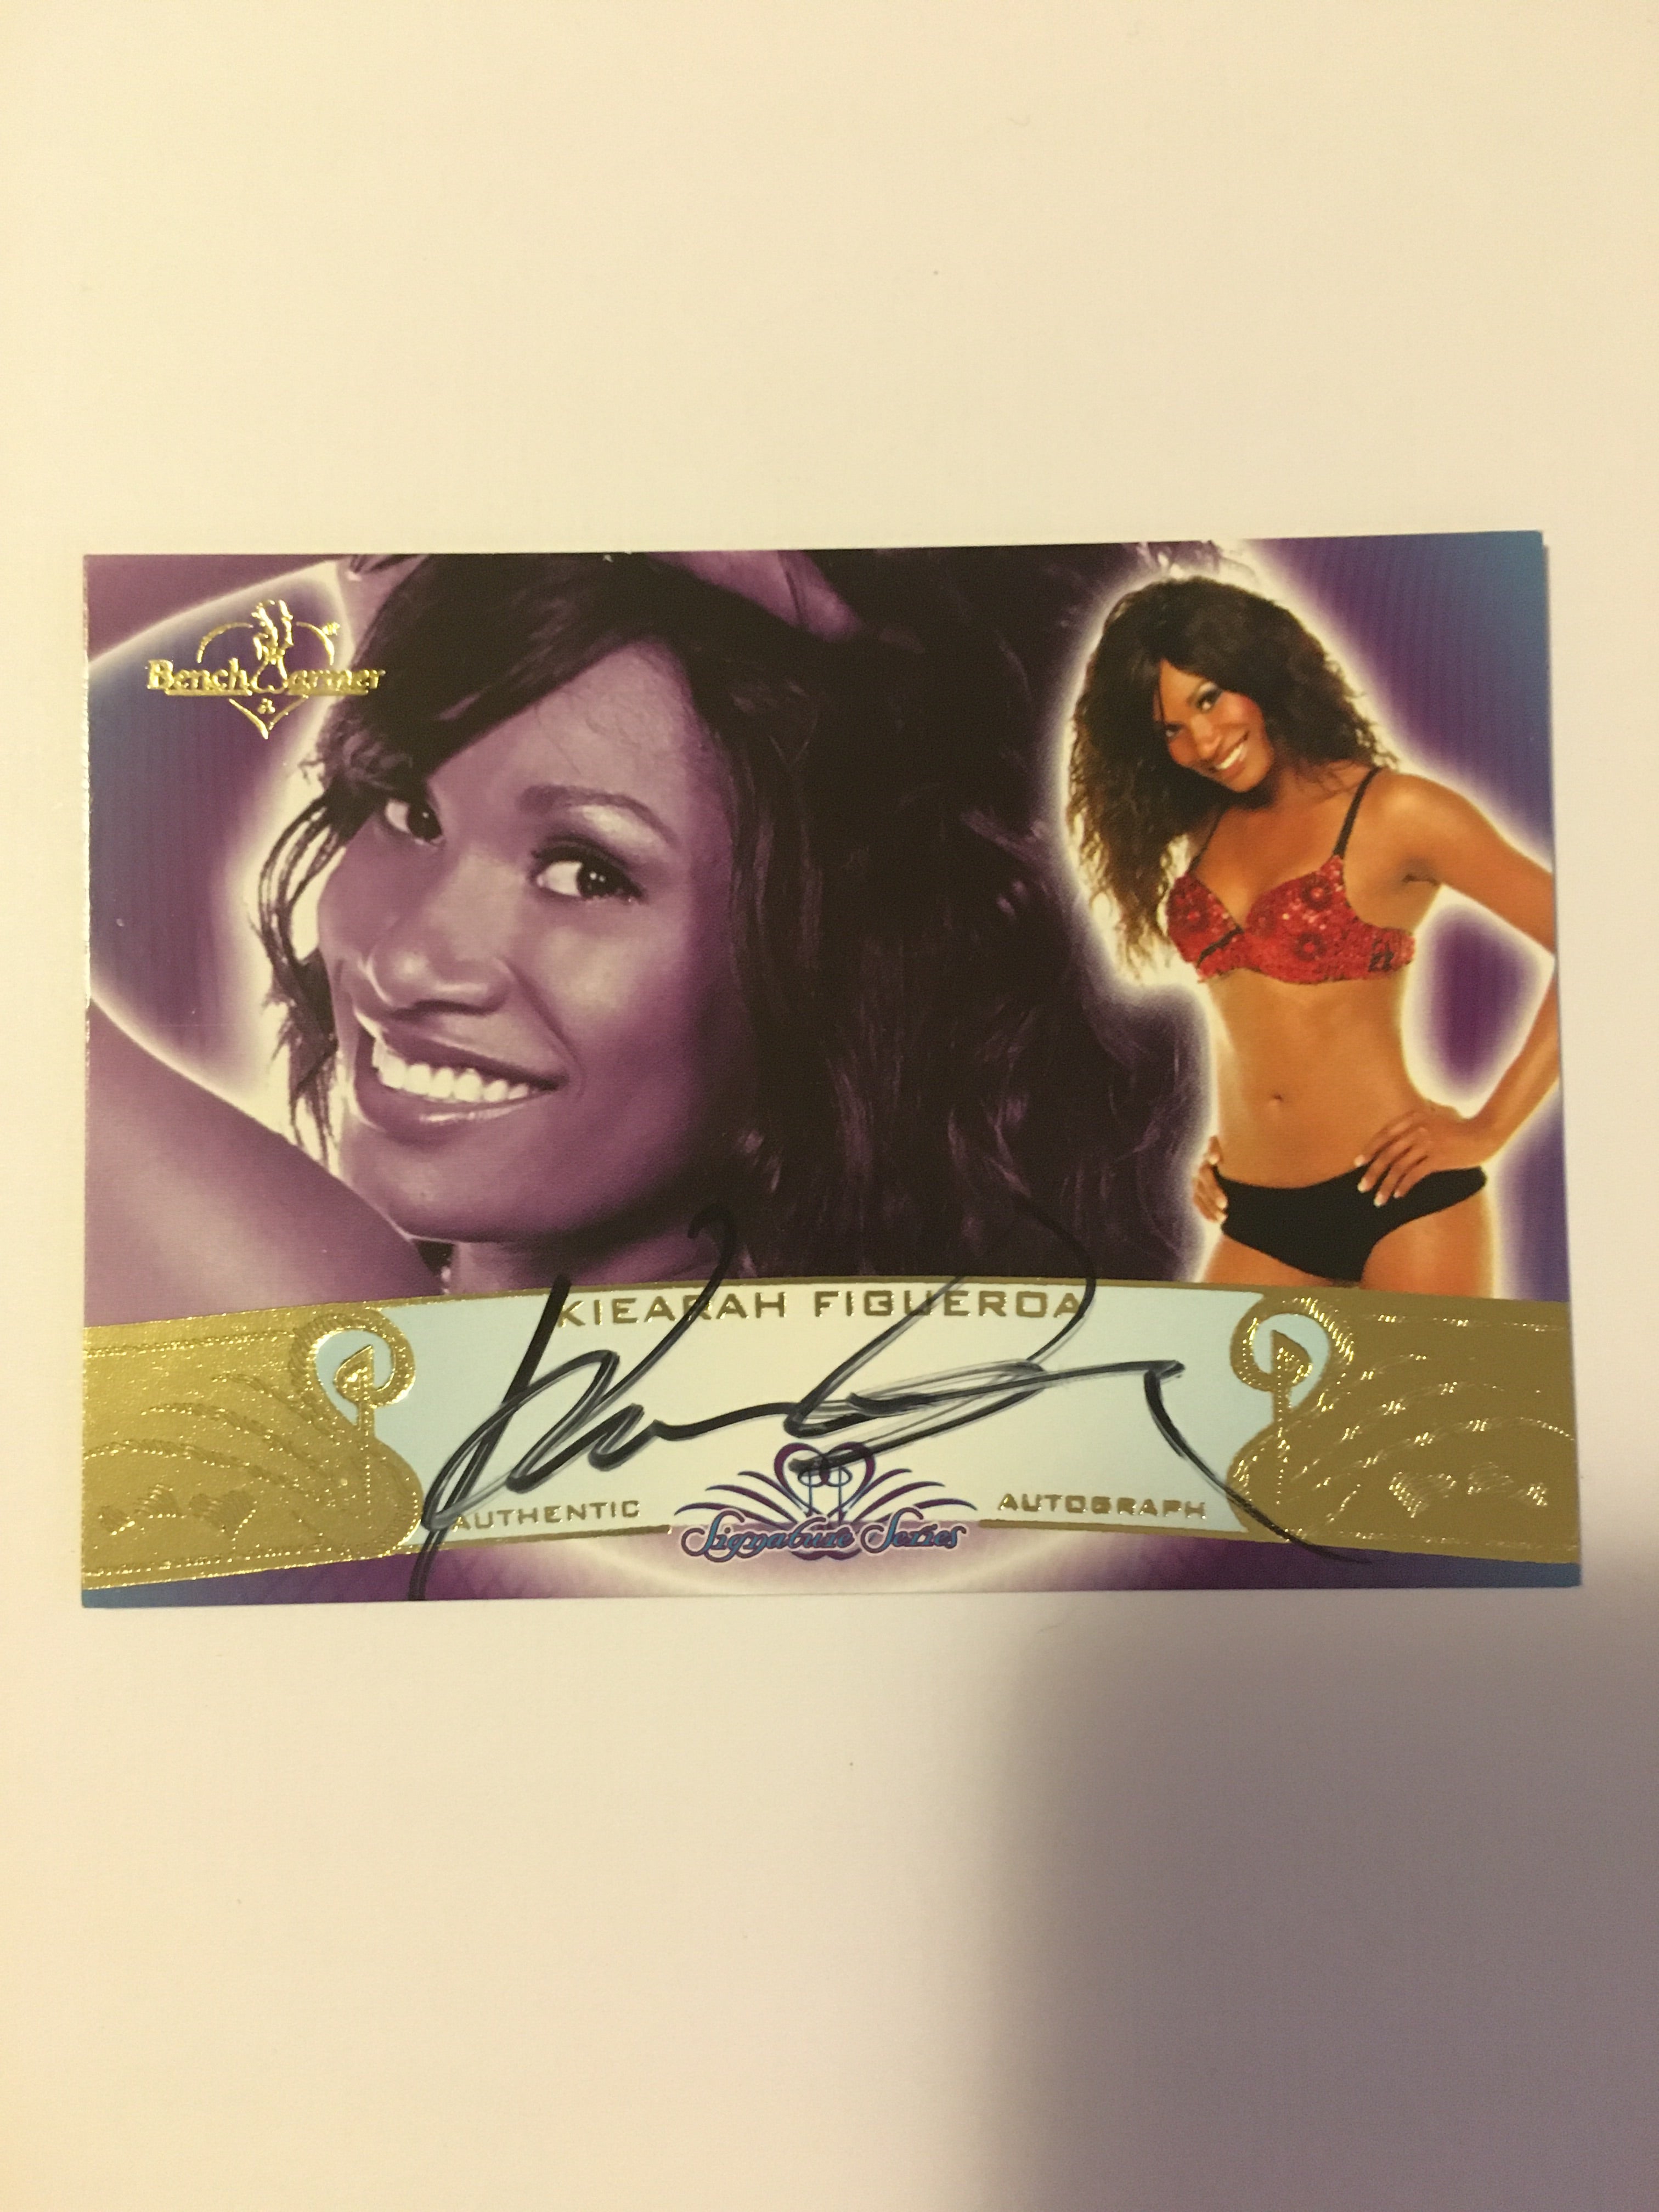 Kiearah Figueroa - Autographed Benchwarmer Trading Card (1)